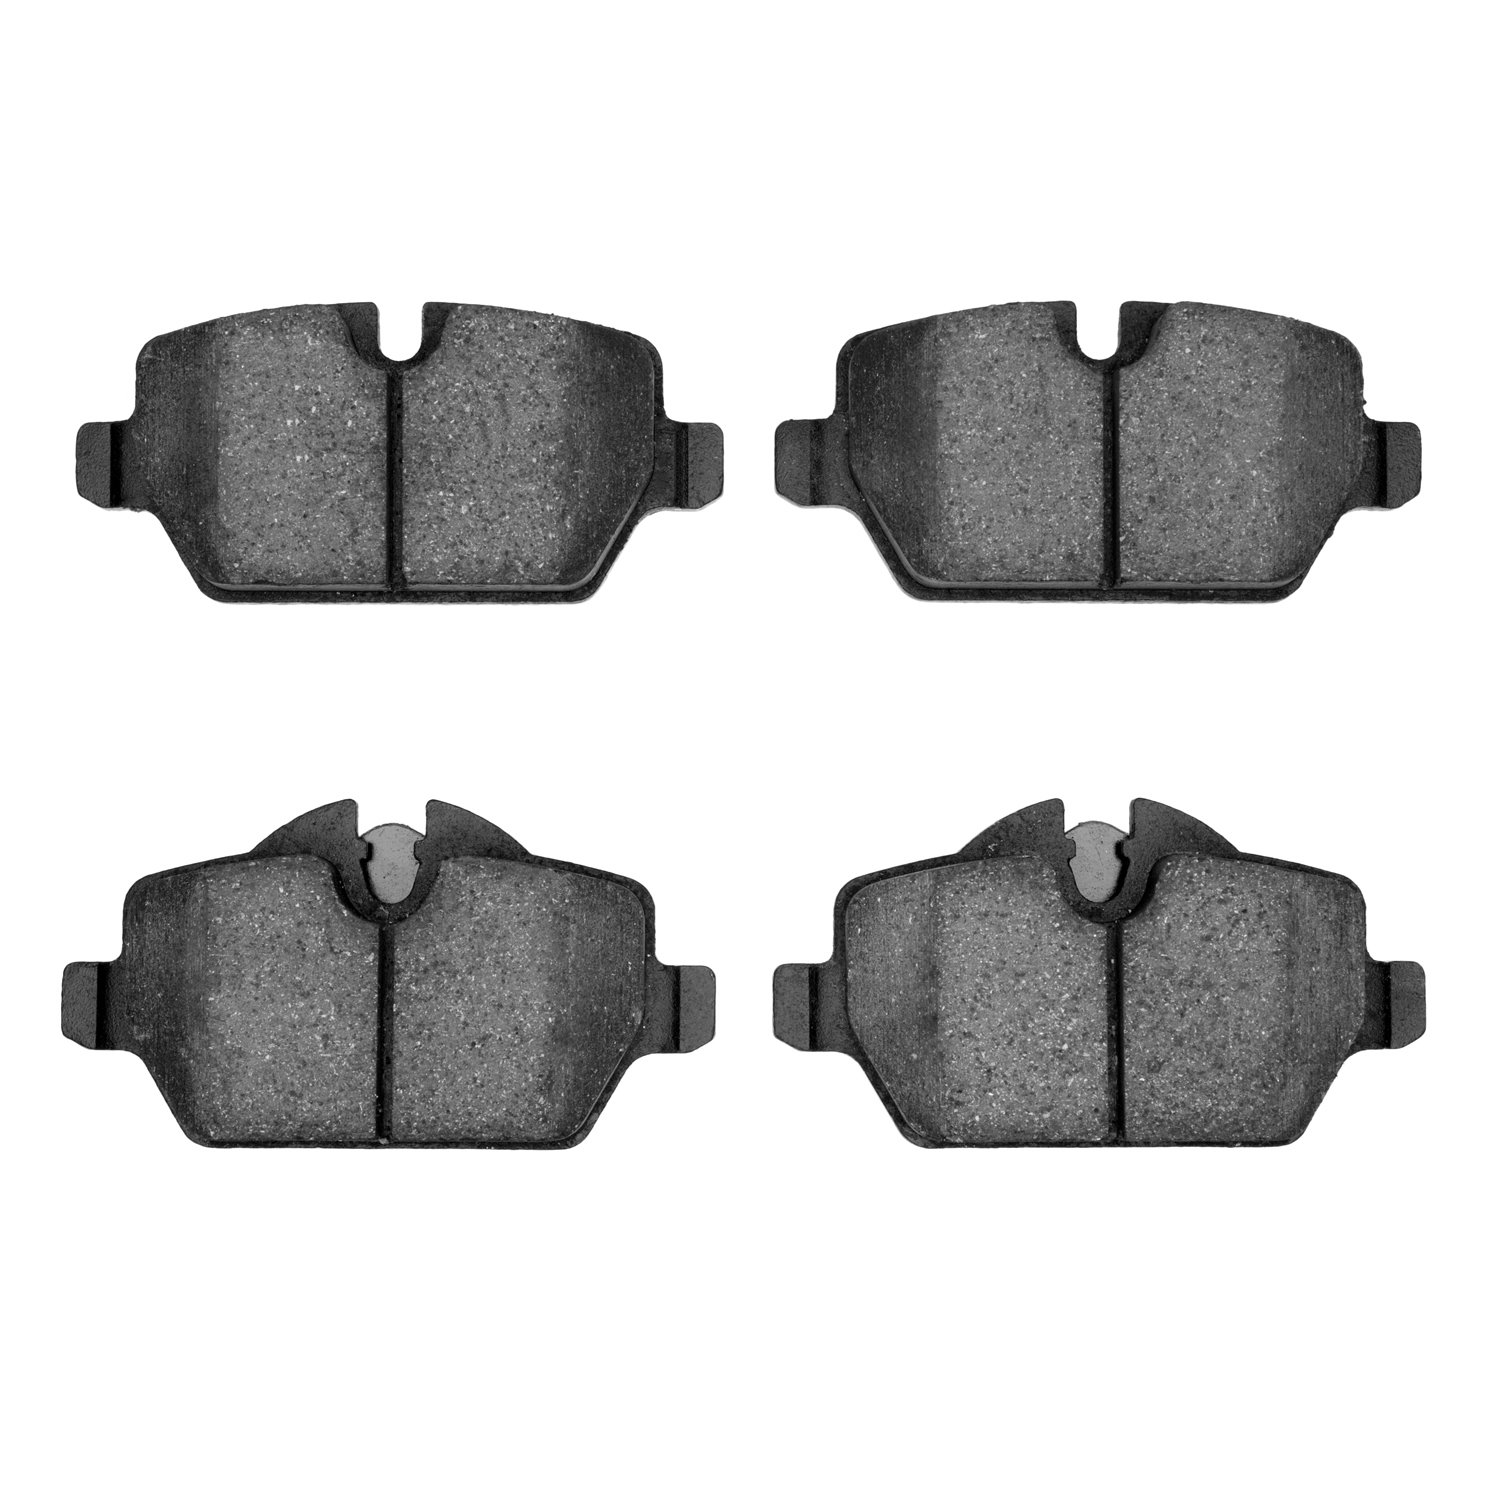 1310-1226-00 3000-Series Ceramic Brake Pads, 2005-2016 Multiple Makes/Models, Position: Rear